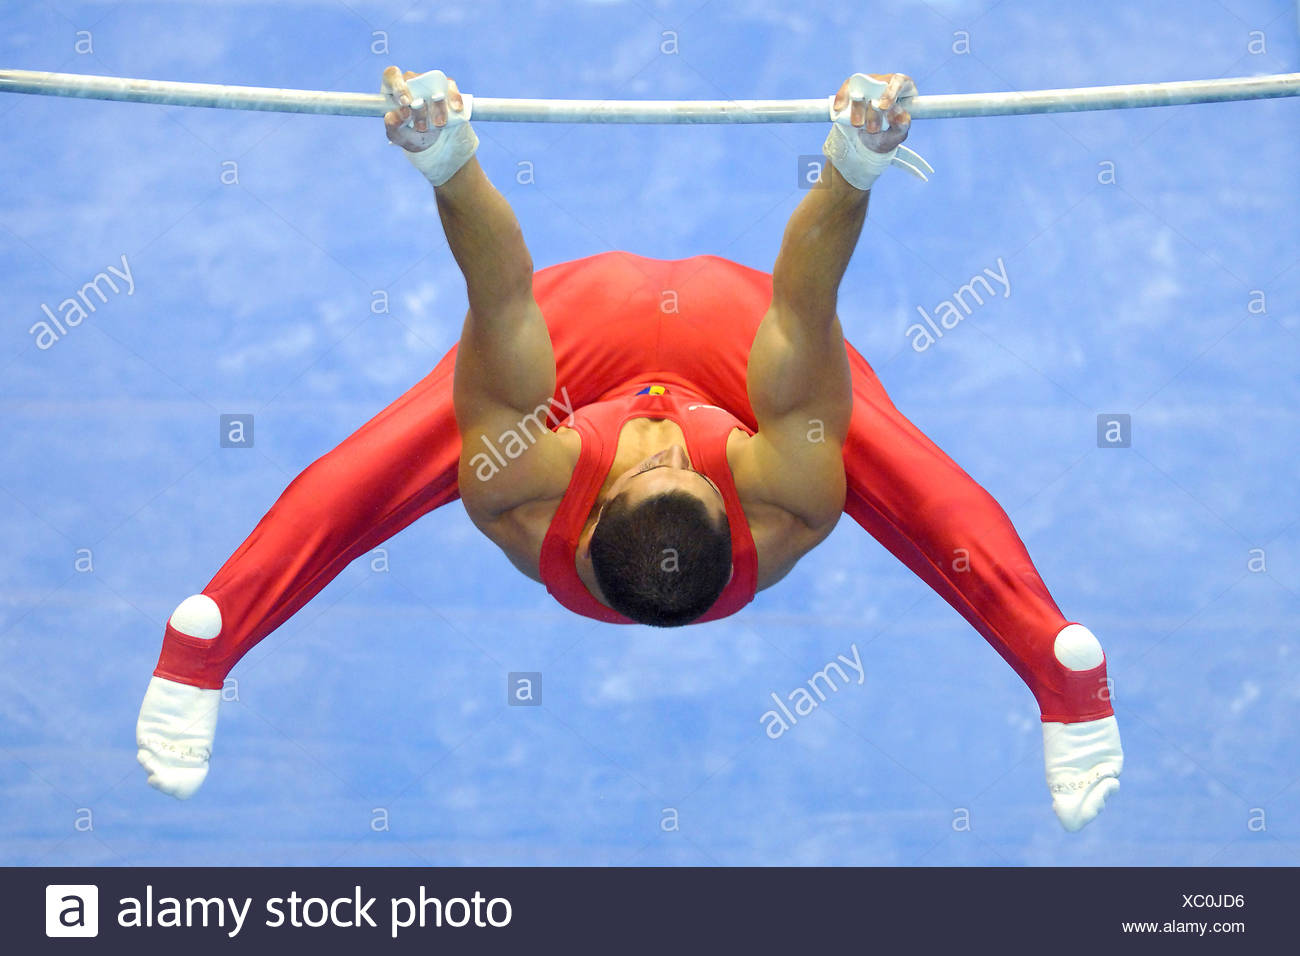 Artistic Gymnastics High Bar Bird S View Stock Photo 282756242